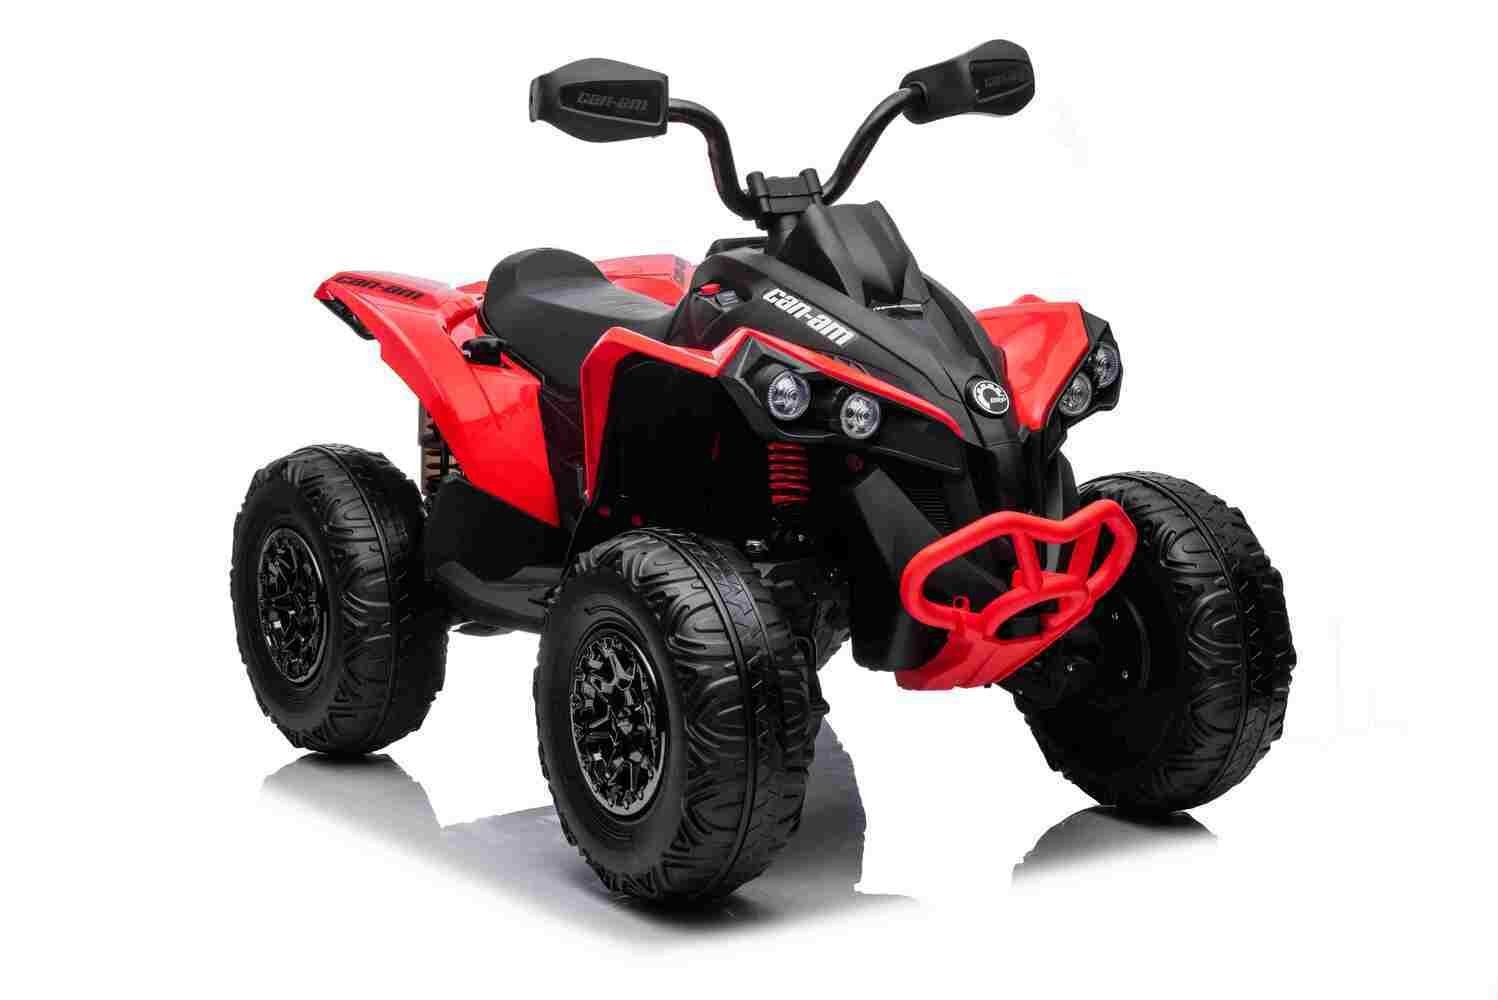 BoGi Elektro-Kinderquad Can-am ATV Quad Kinderfahrzeug Elektrofahrzeug Elektroquad 4x4 Antrieb Rot